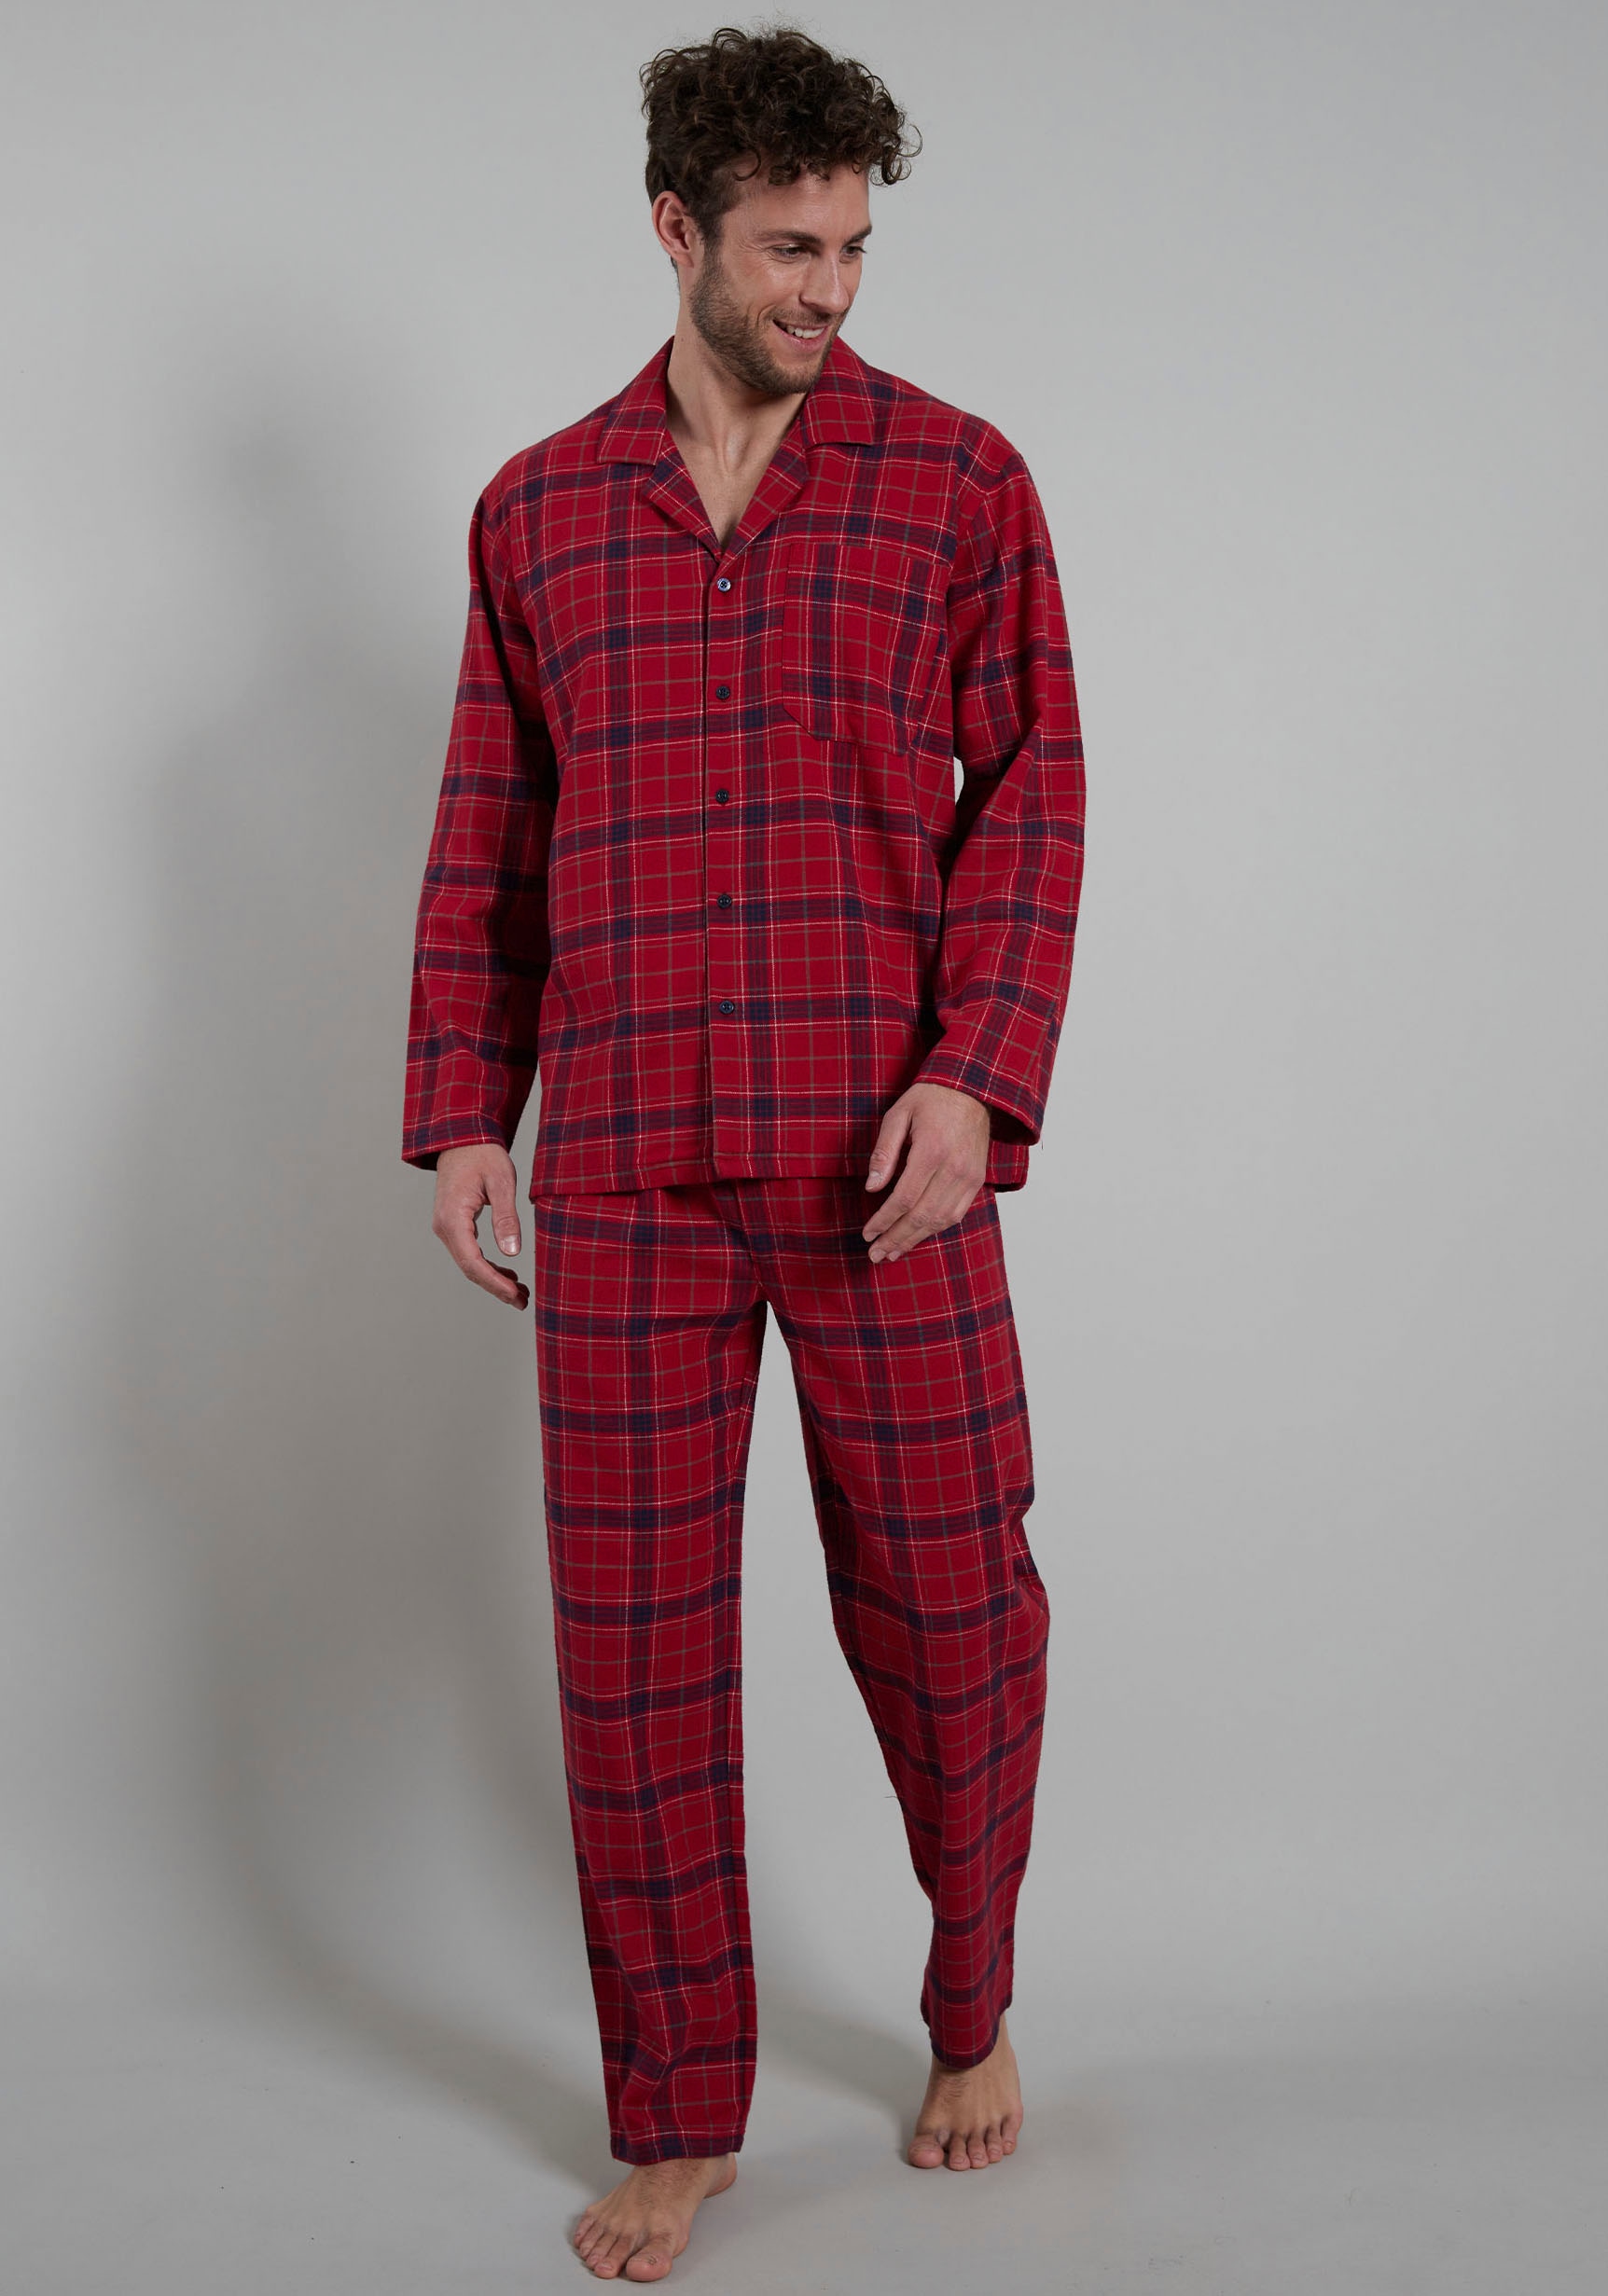 Pyjama TOM TAILOR kaufen bei online OTTO